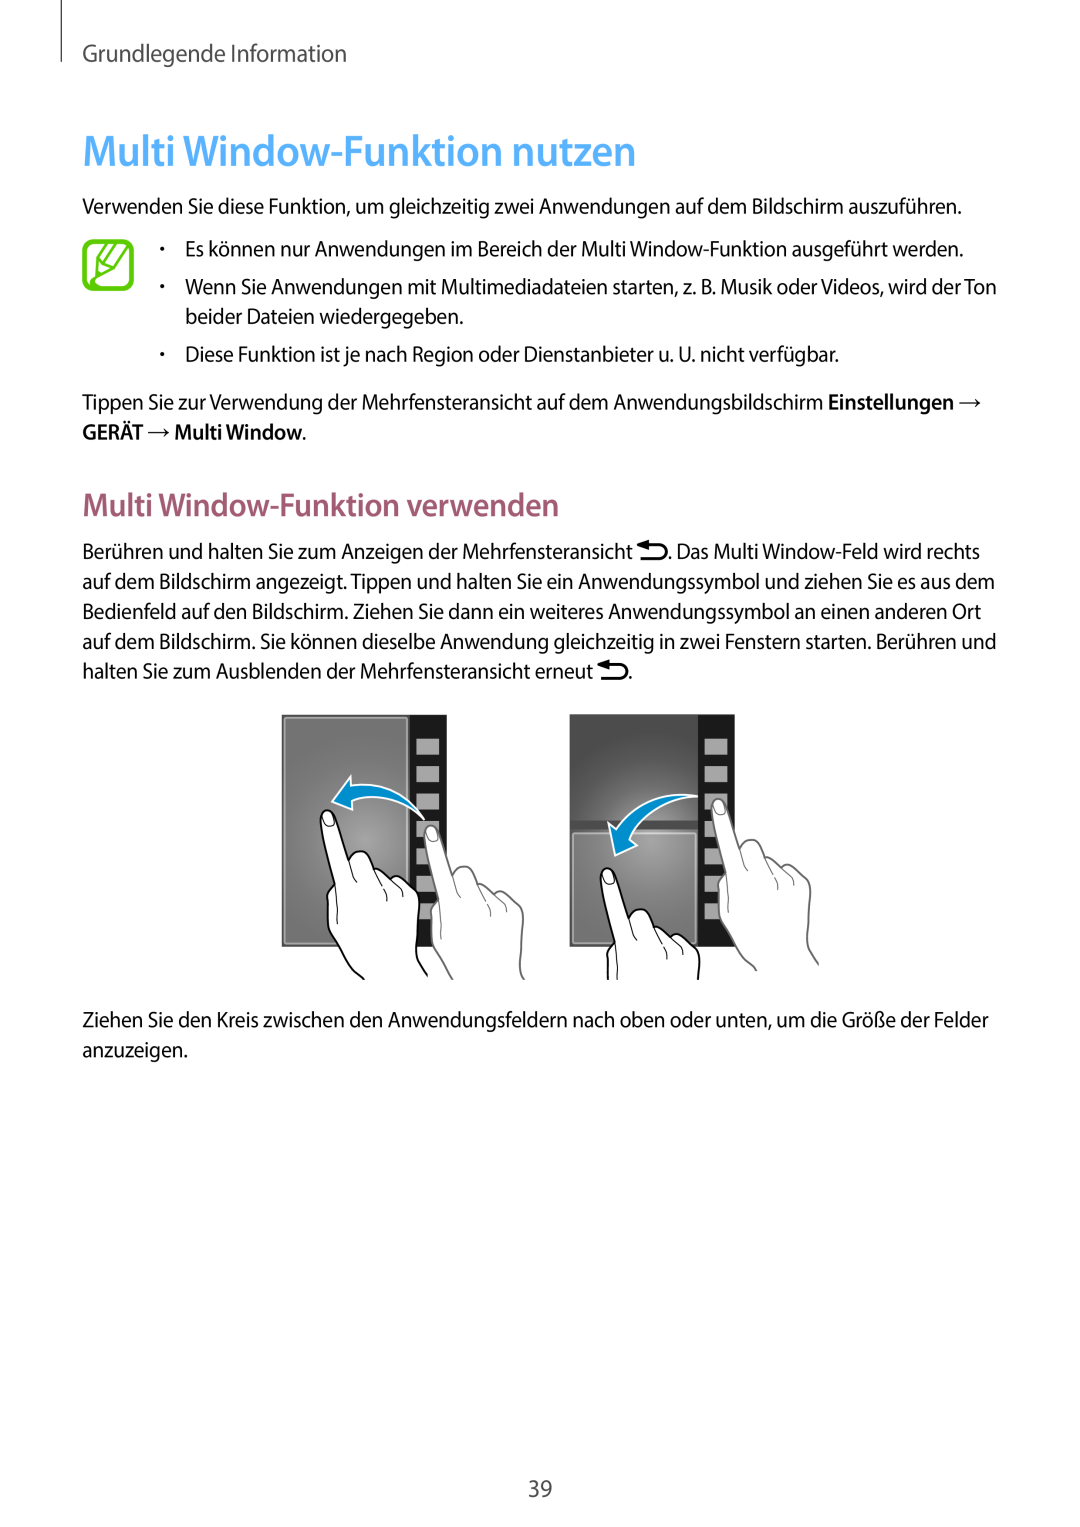 Samsung SM-N9005ZWECOS manual Multi Window-Funktion nutzen, Multi Window-Funktion verwenden, Grundlegende Information 